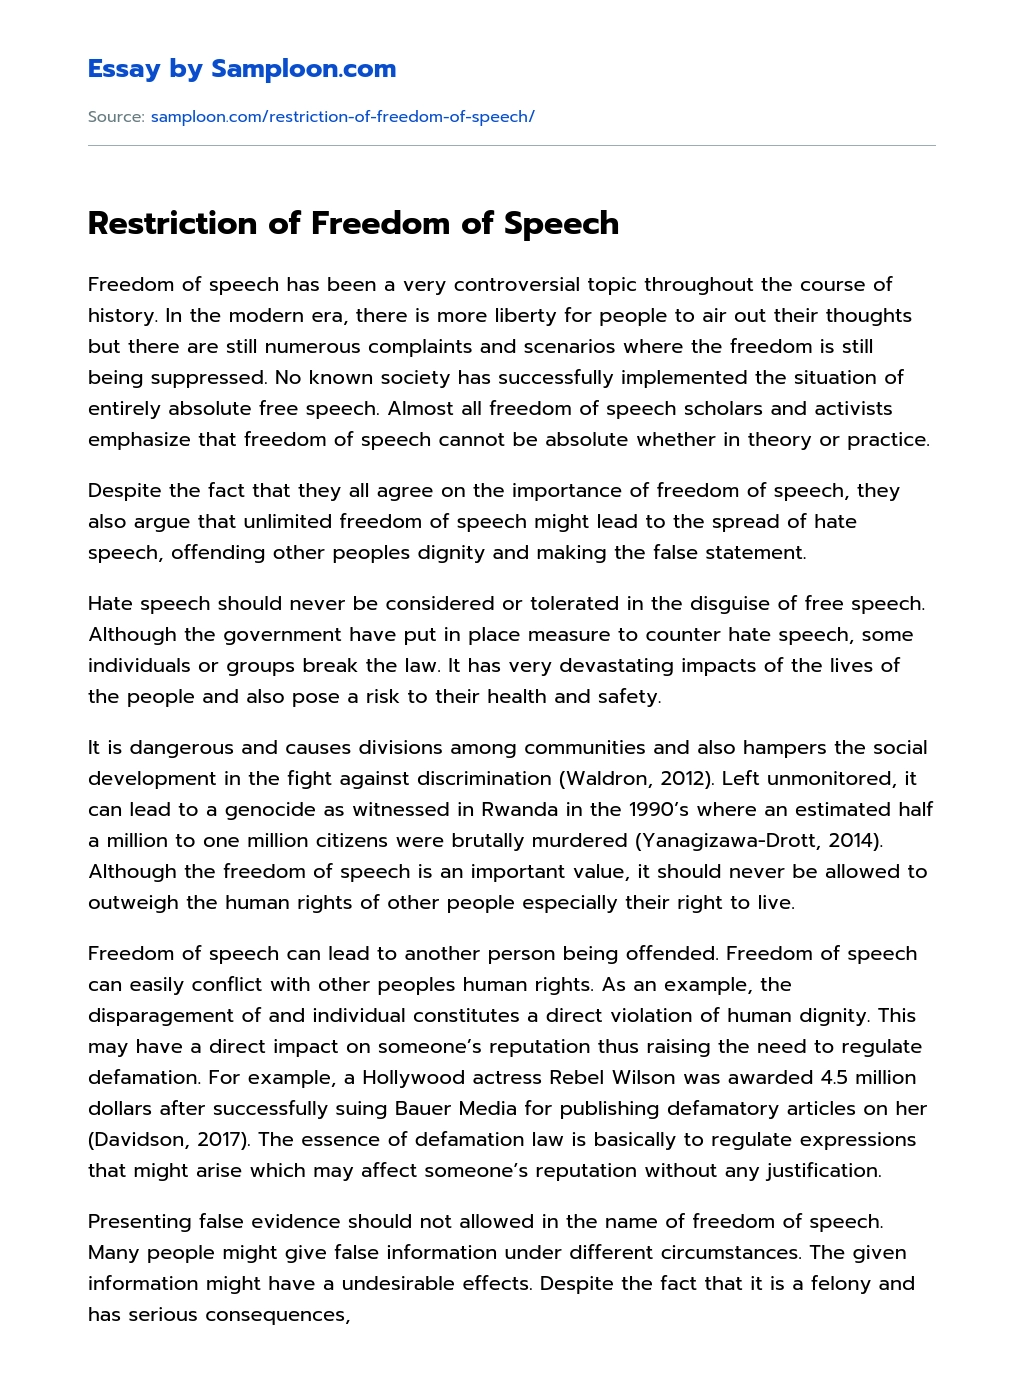 Restriction of Freedom of Speech essay